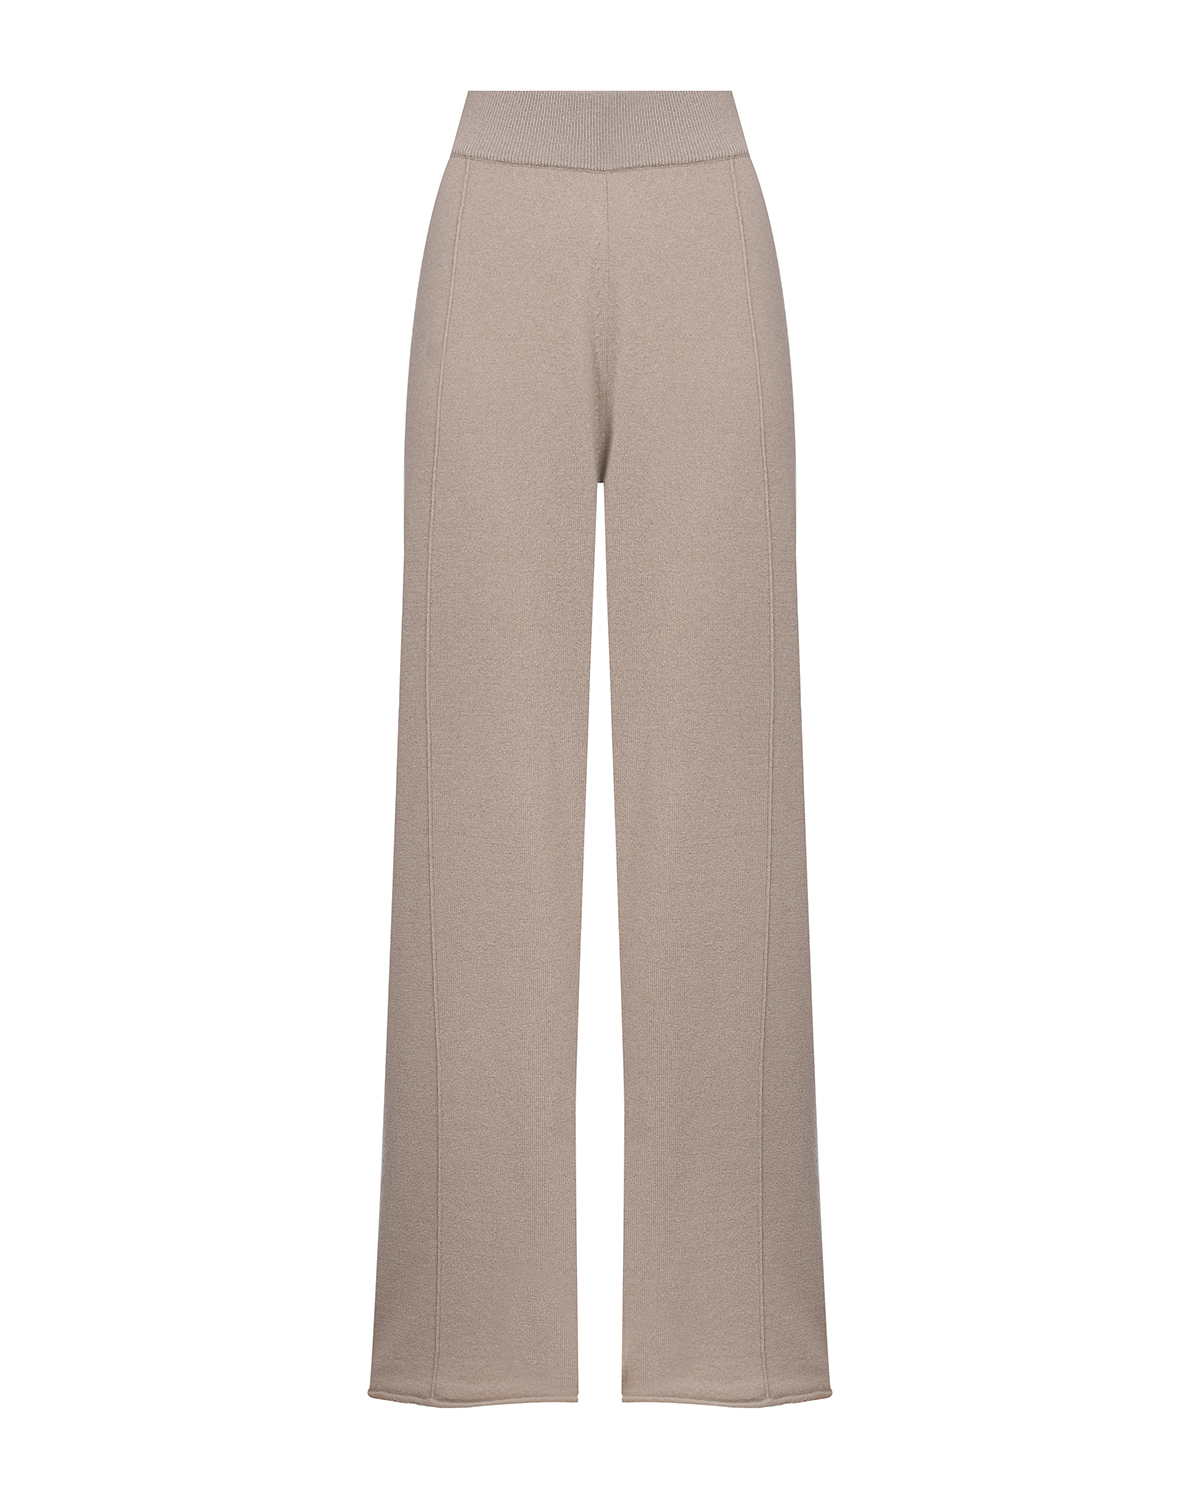 Бежевые брюки из шерсти и кашемира Allude, размер 40, цвет бежевый - фото 1